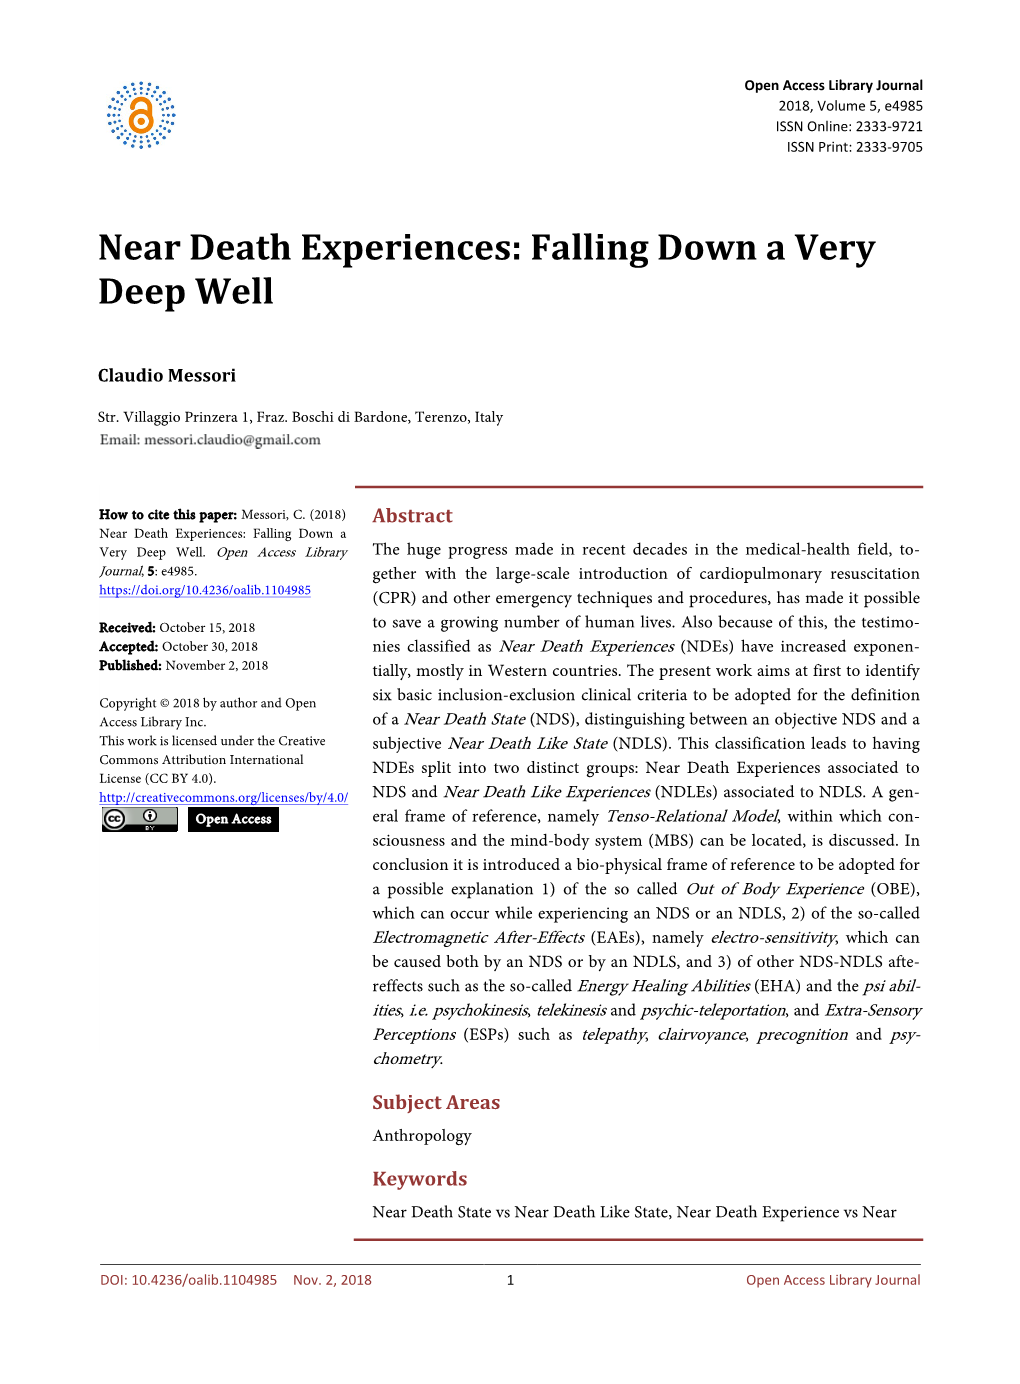 Near Death Experiences: Falling Down a Very Deep Well